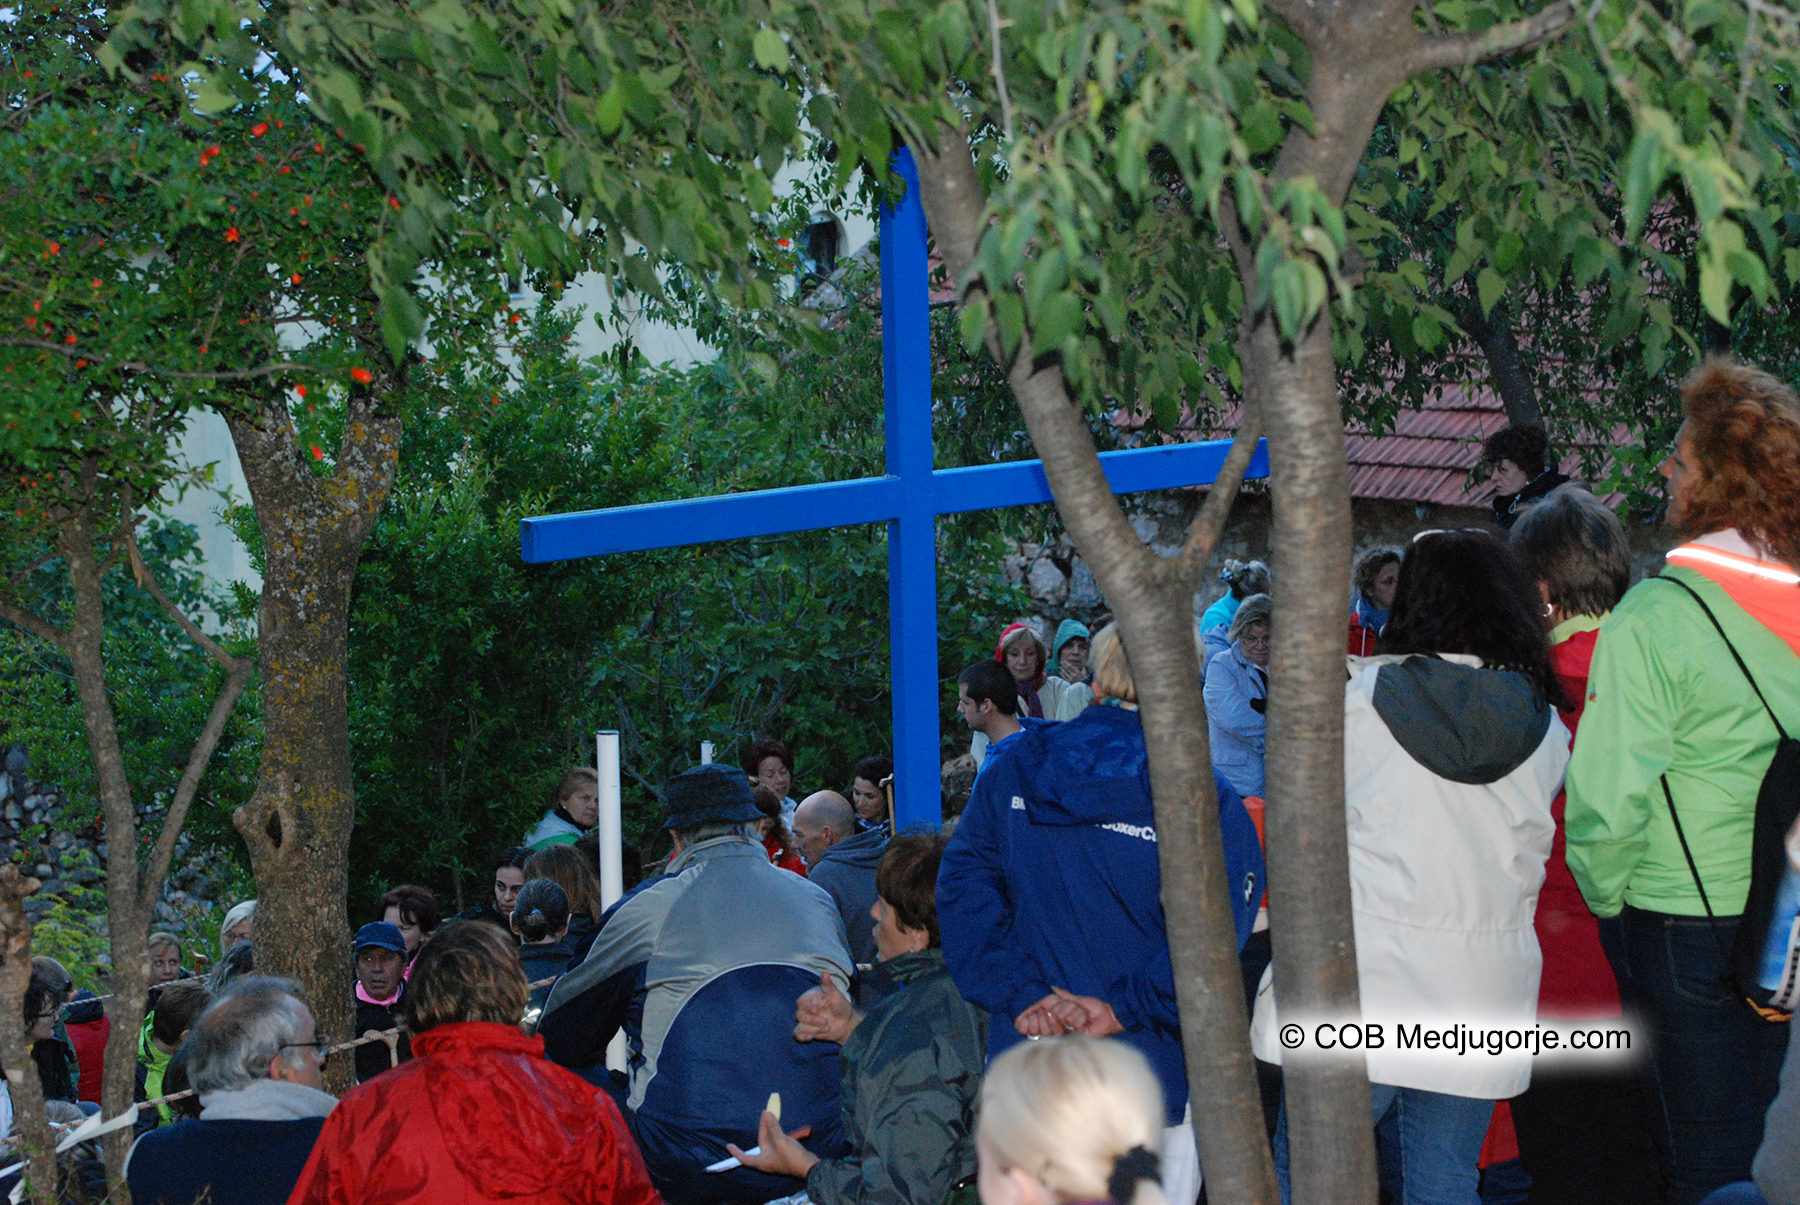 The Blue Cross at Ivan's Prayer Group May 24, 2013